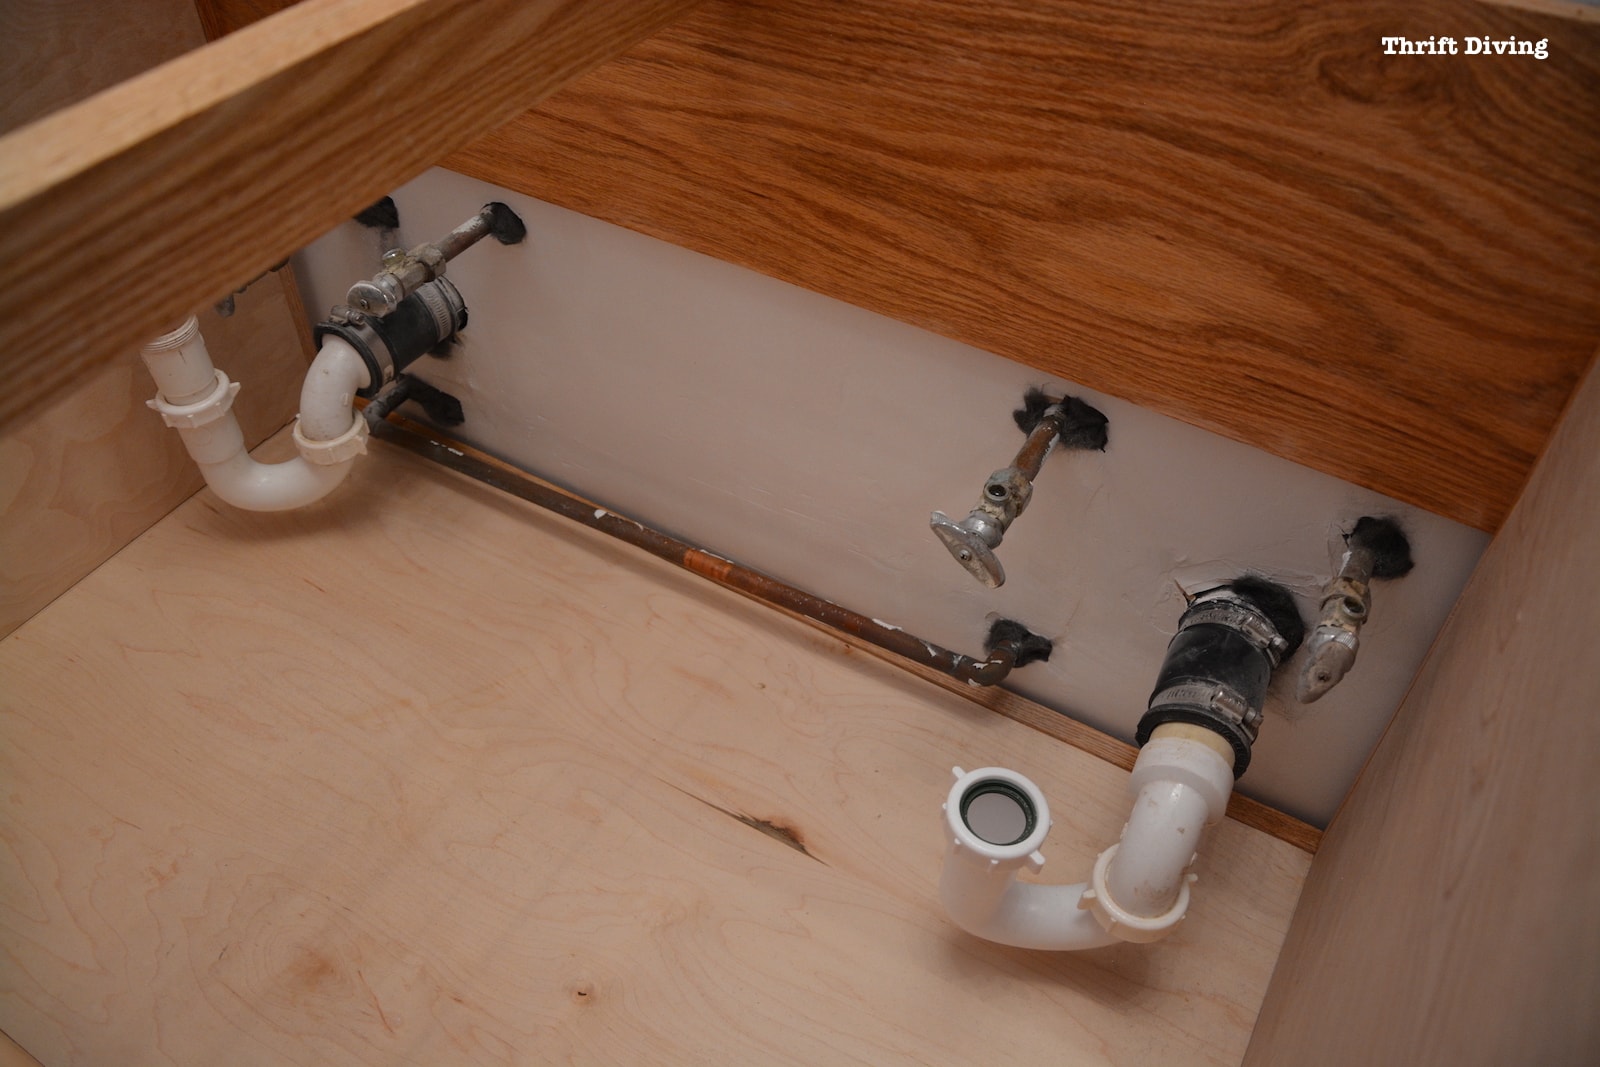 Build-a-DIY-bathroom-vanity-adding-granite-countertop-Thrift-Diving -8337